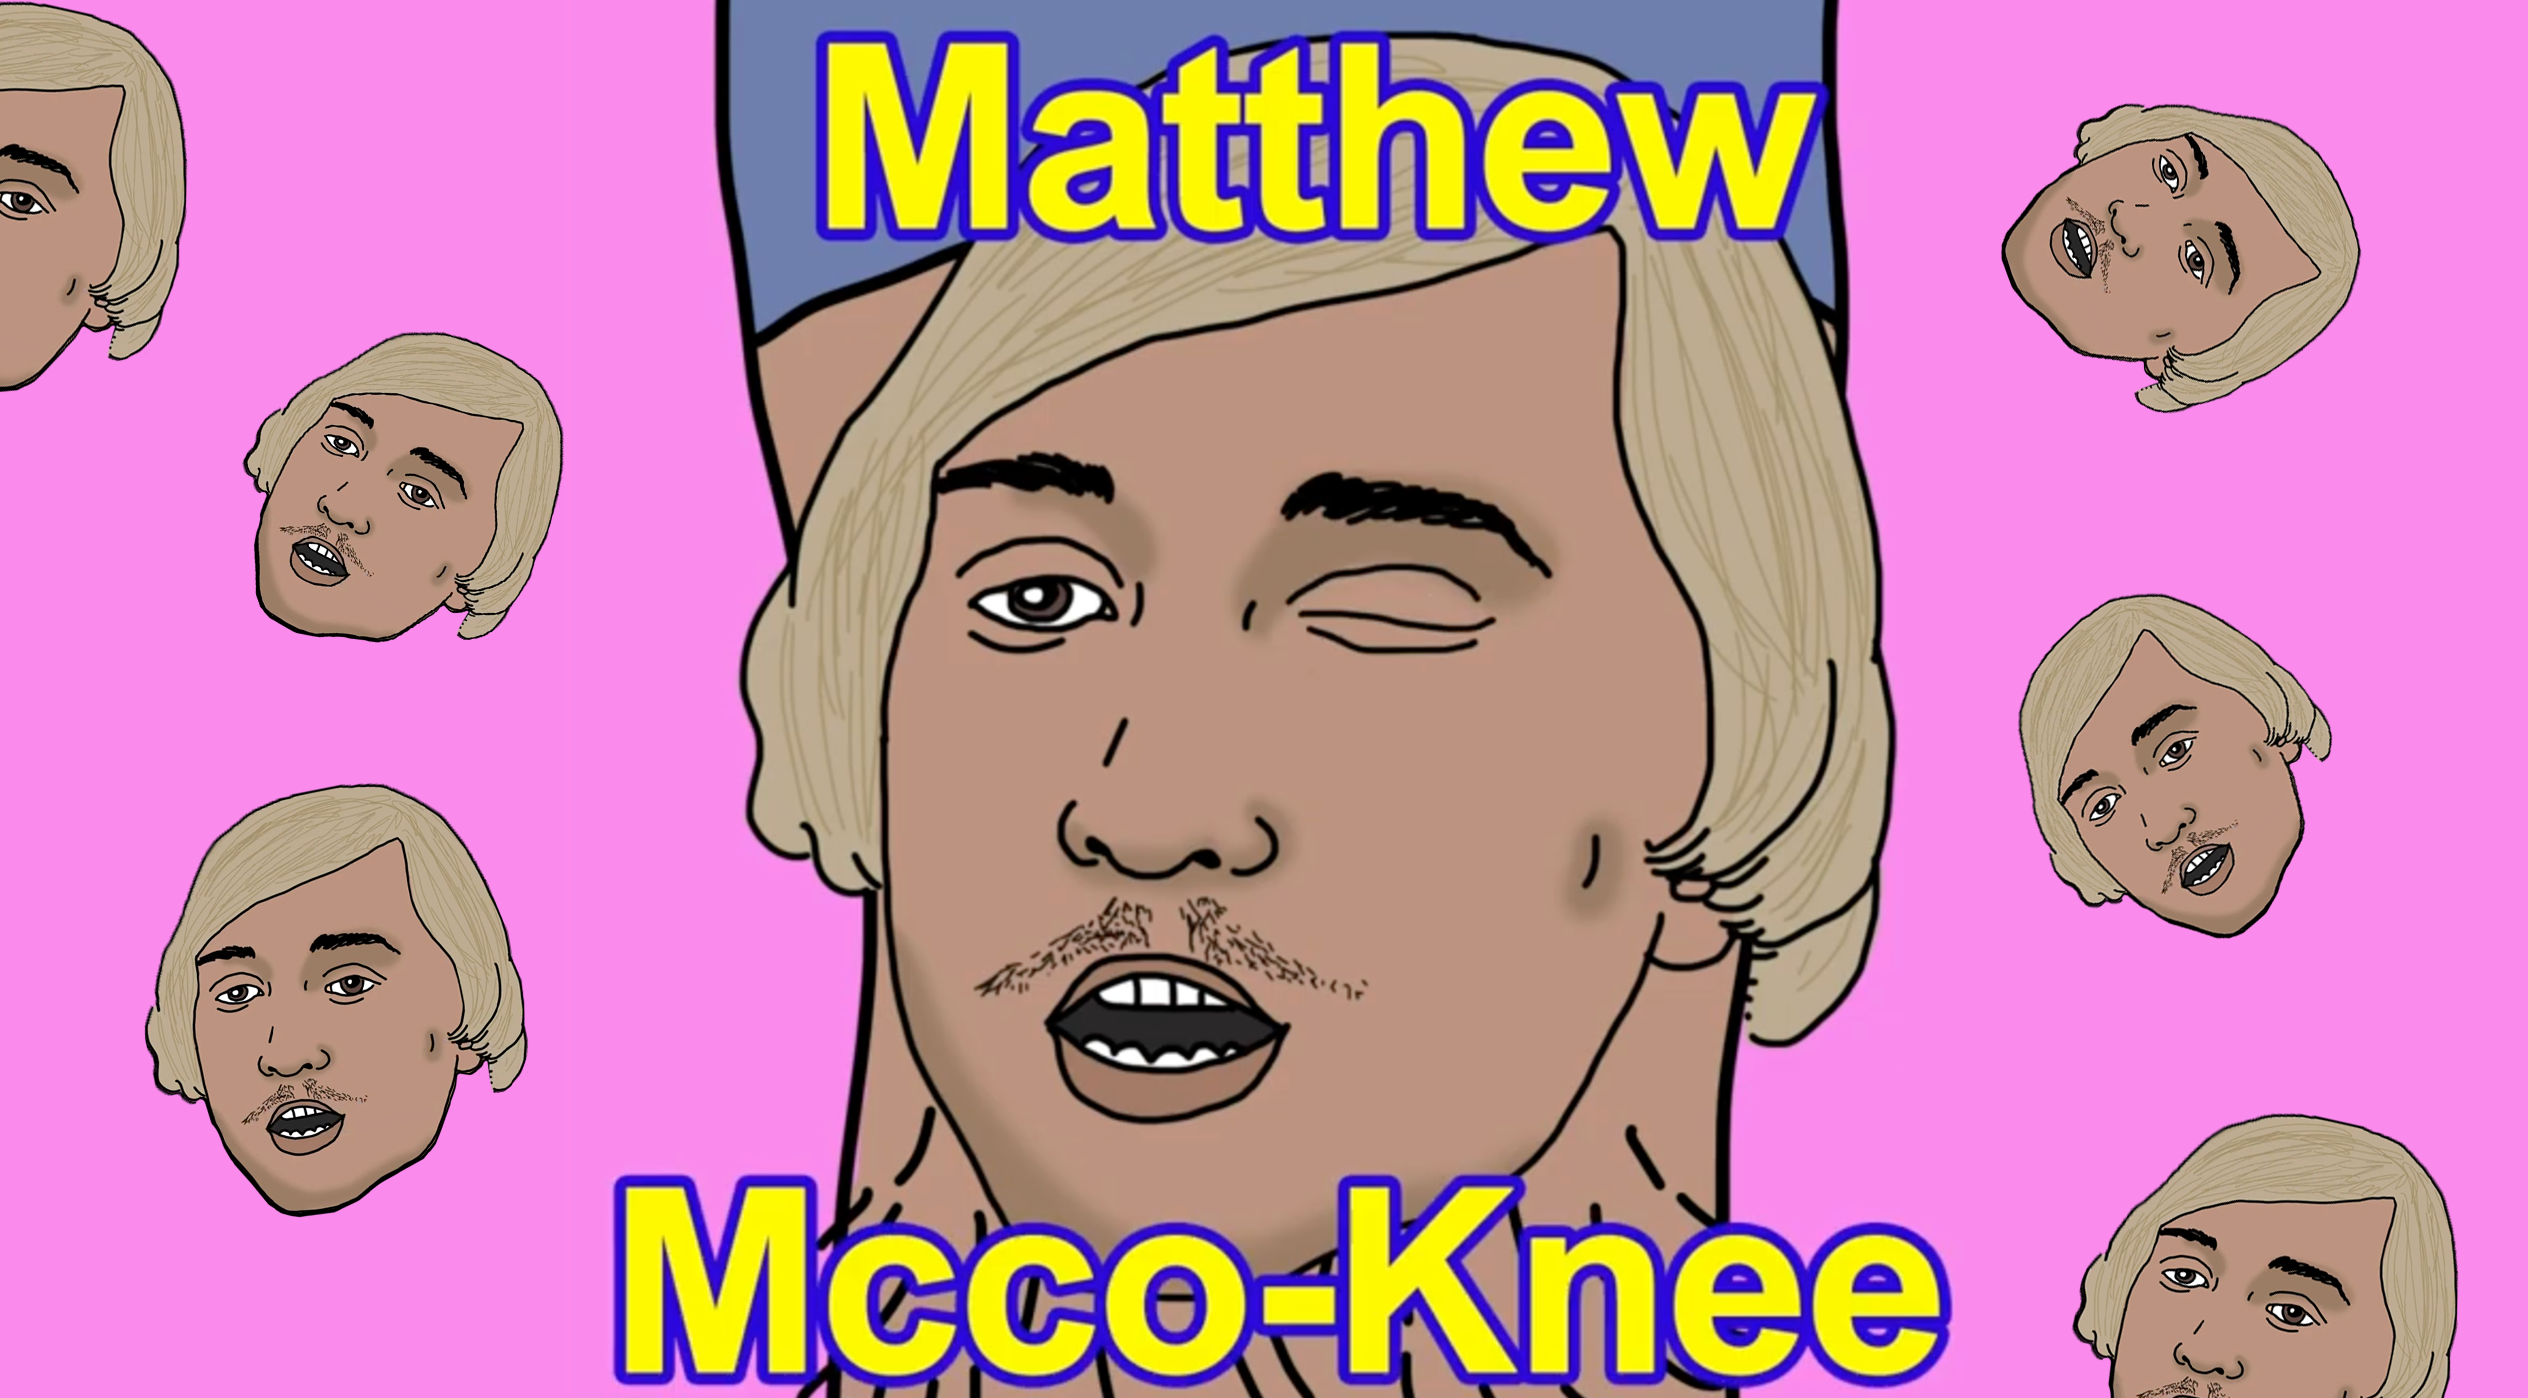 Matthew Mcco-Knee: thumbnail